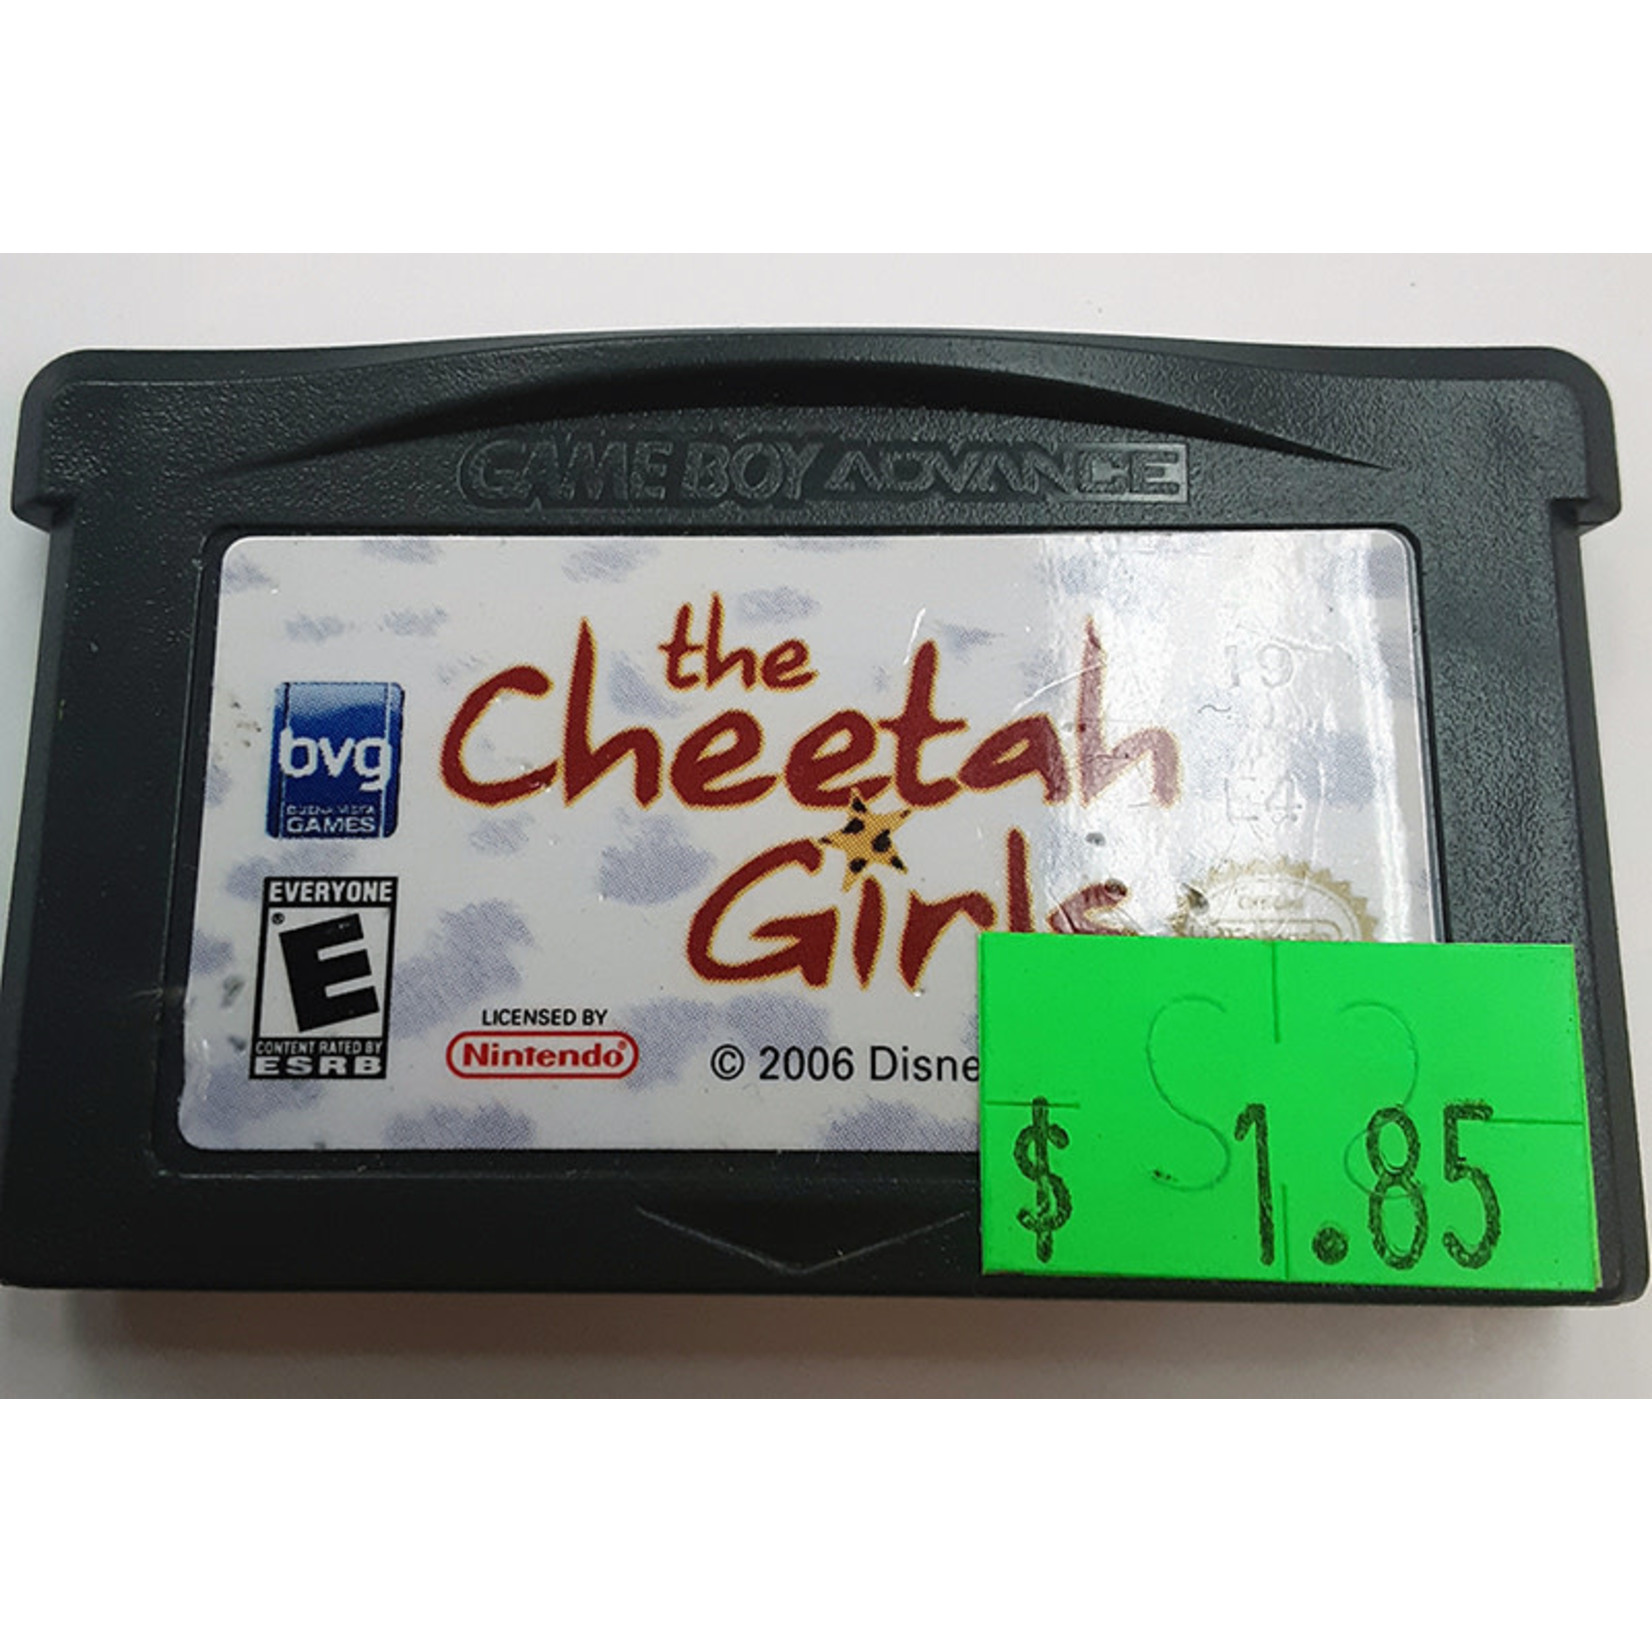 GBAu-The Cheetah Girls (cartridge)